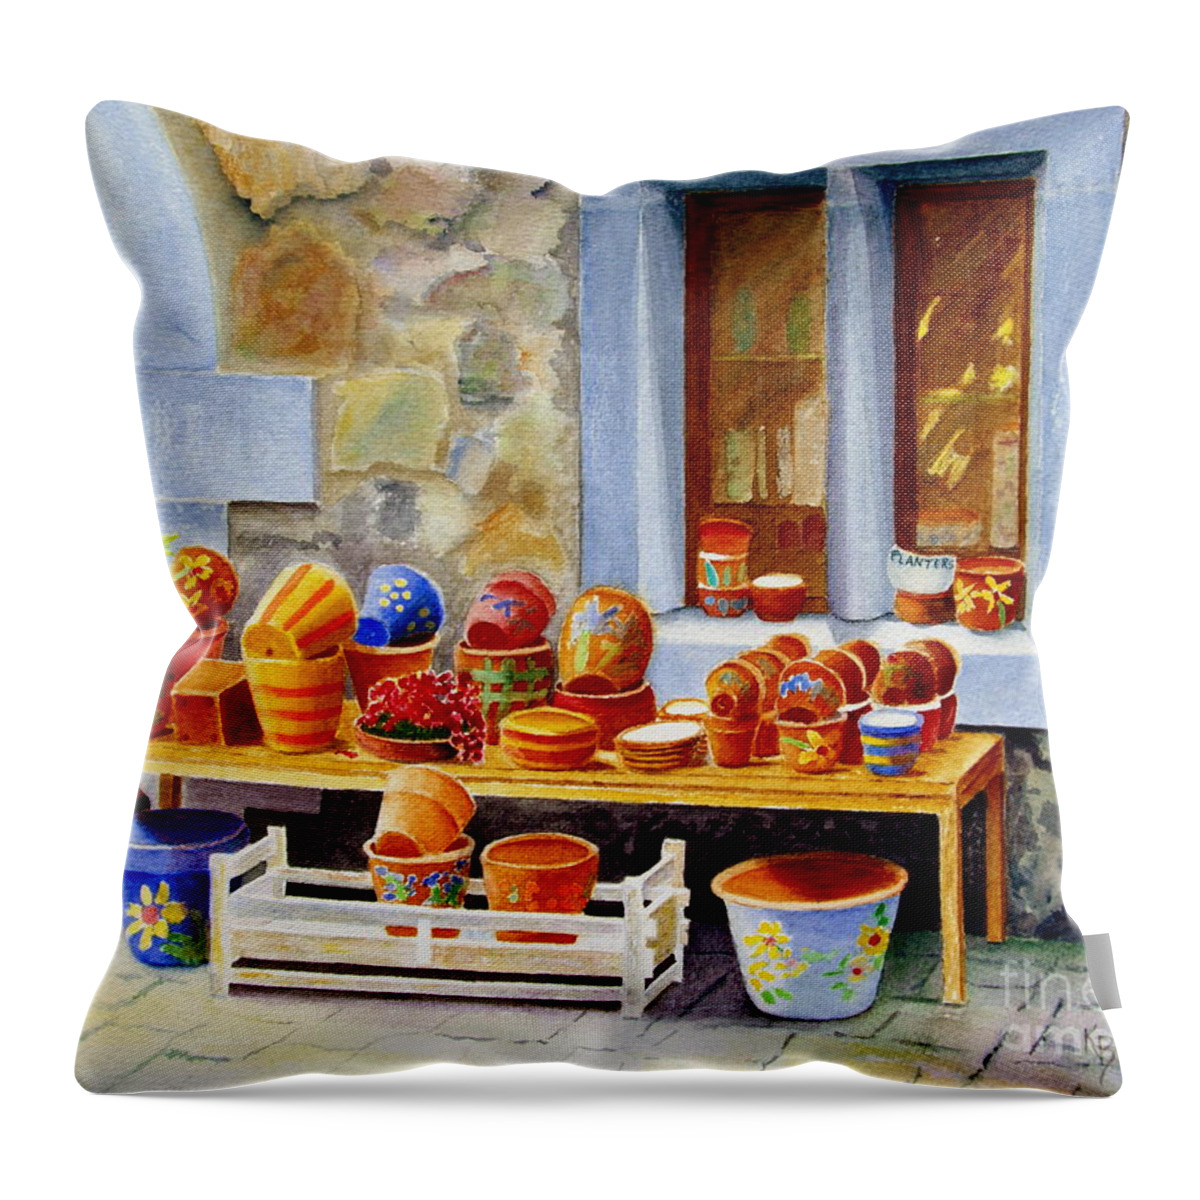 Shop Throw Pillow featuring the painting The Pottery Shop by Karen Fleschler